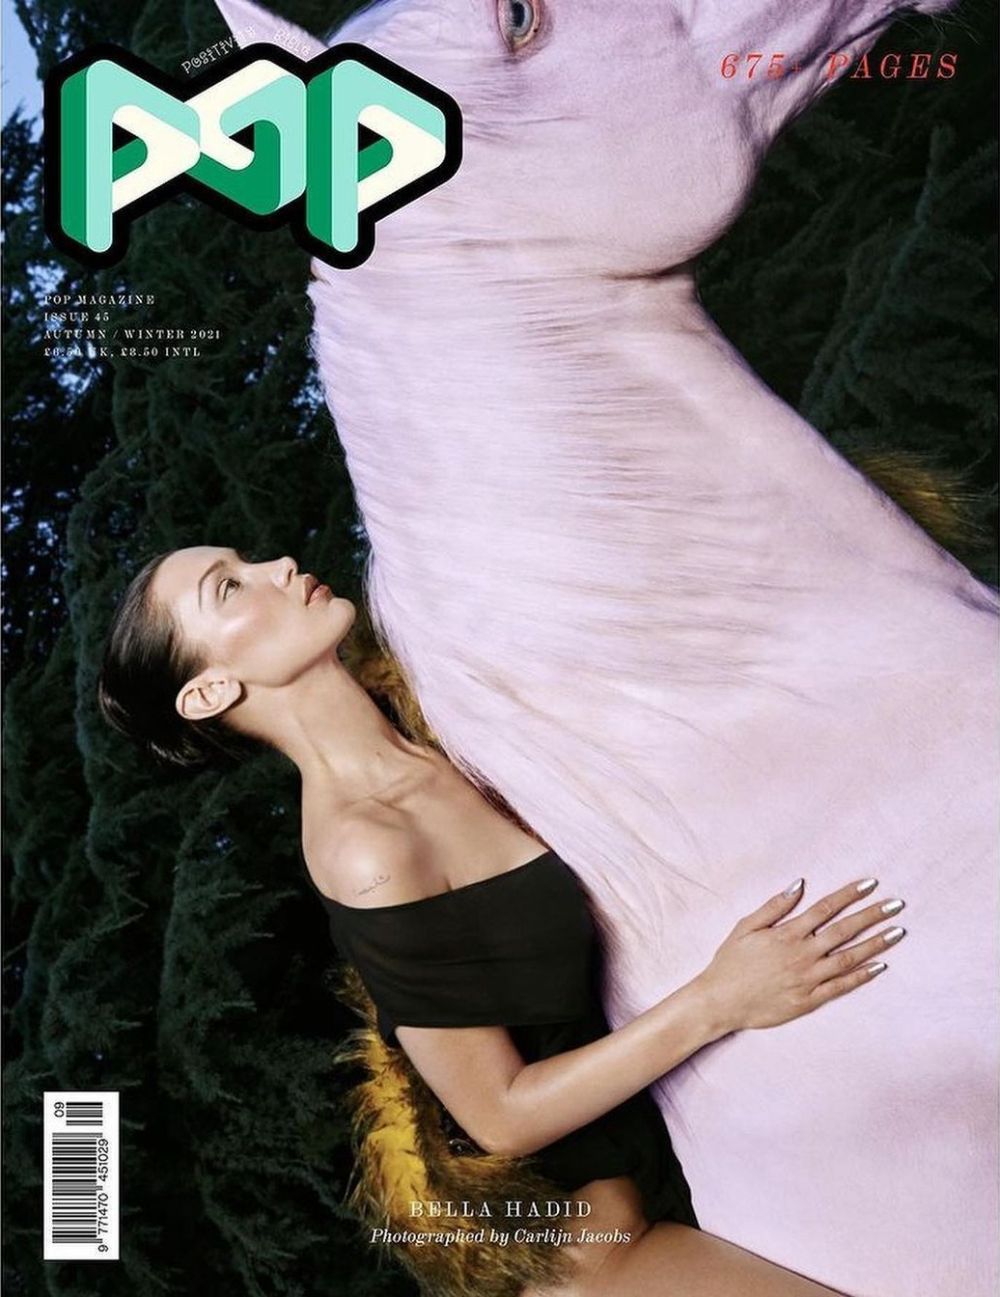 Pop (fashion magazine) - Wikipedia